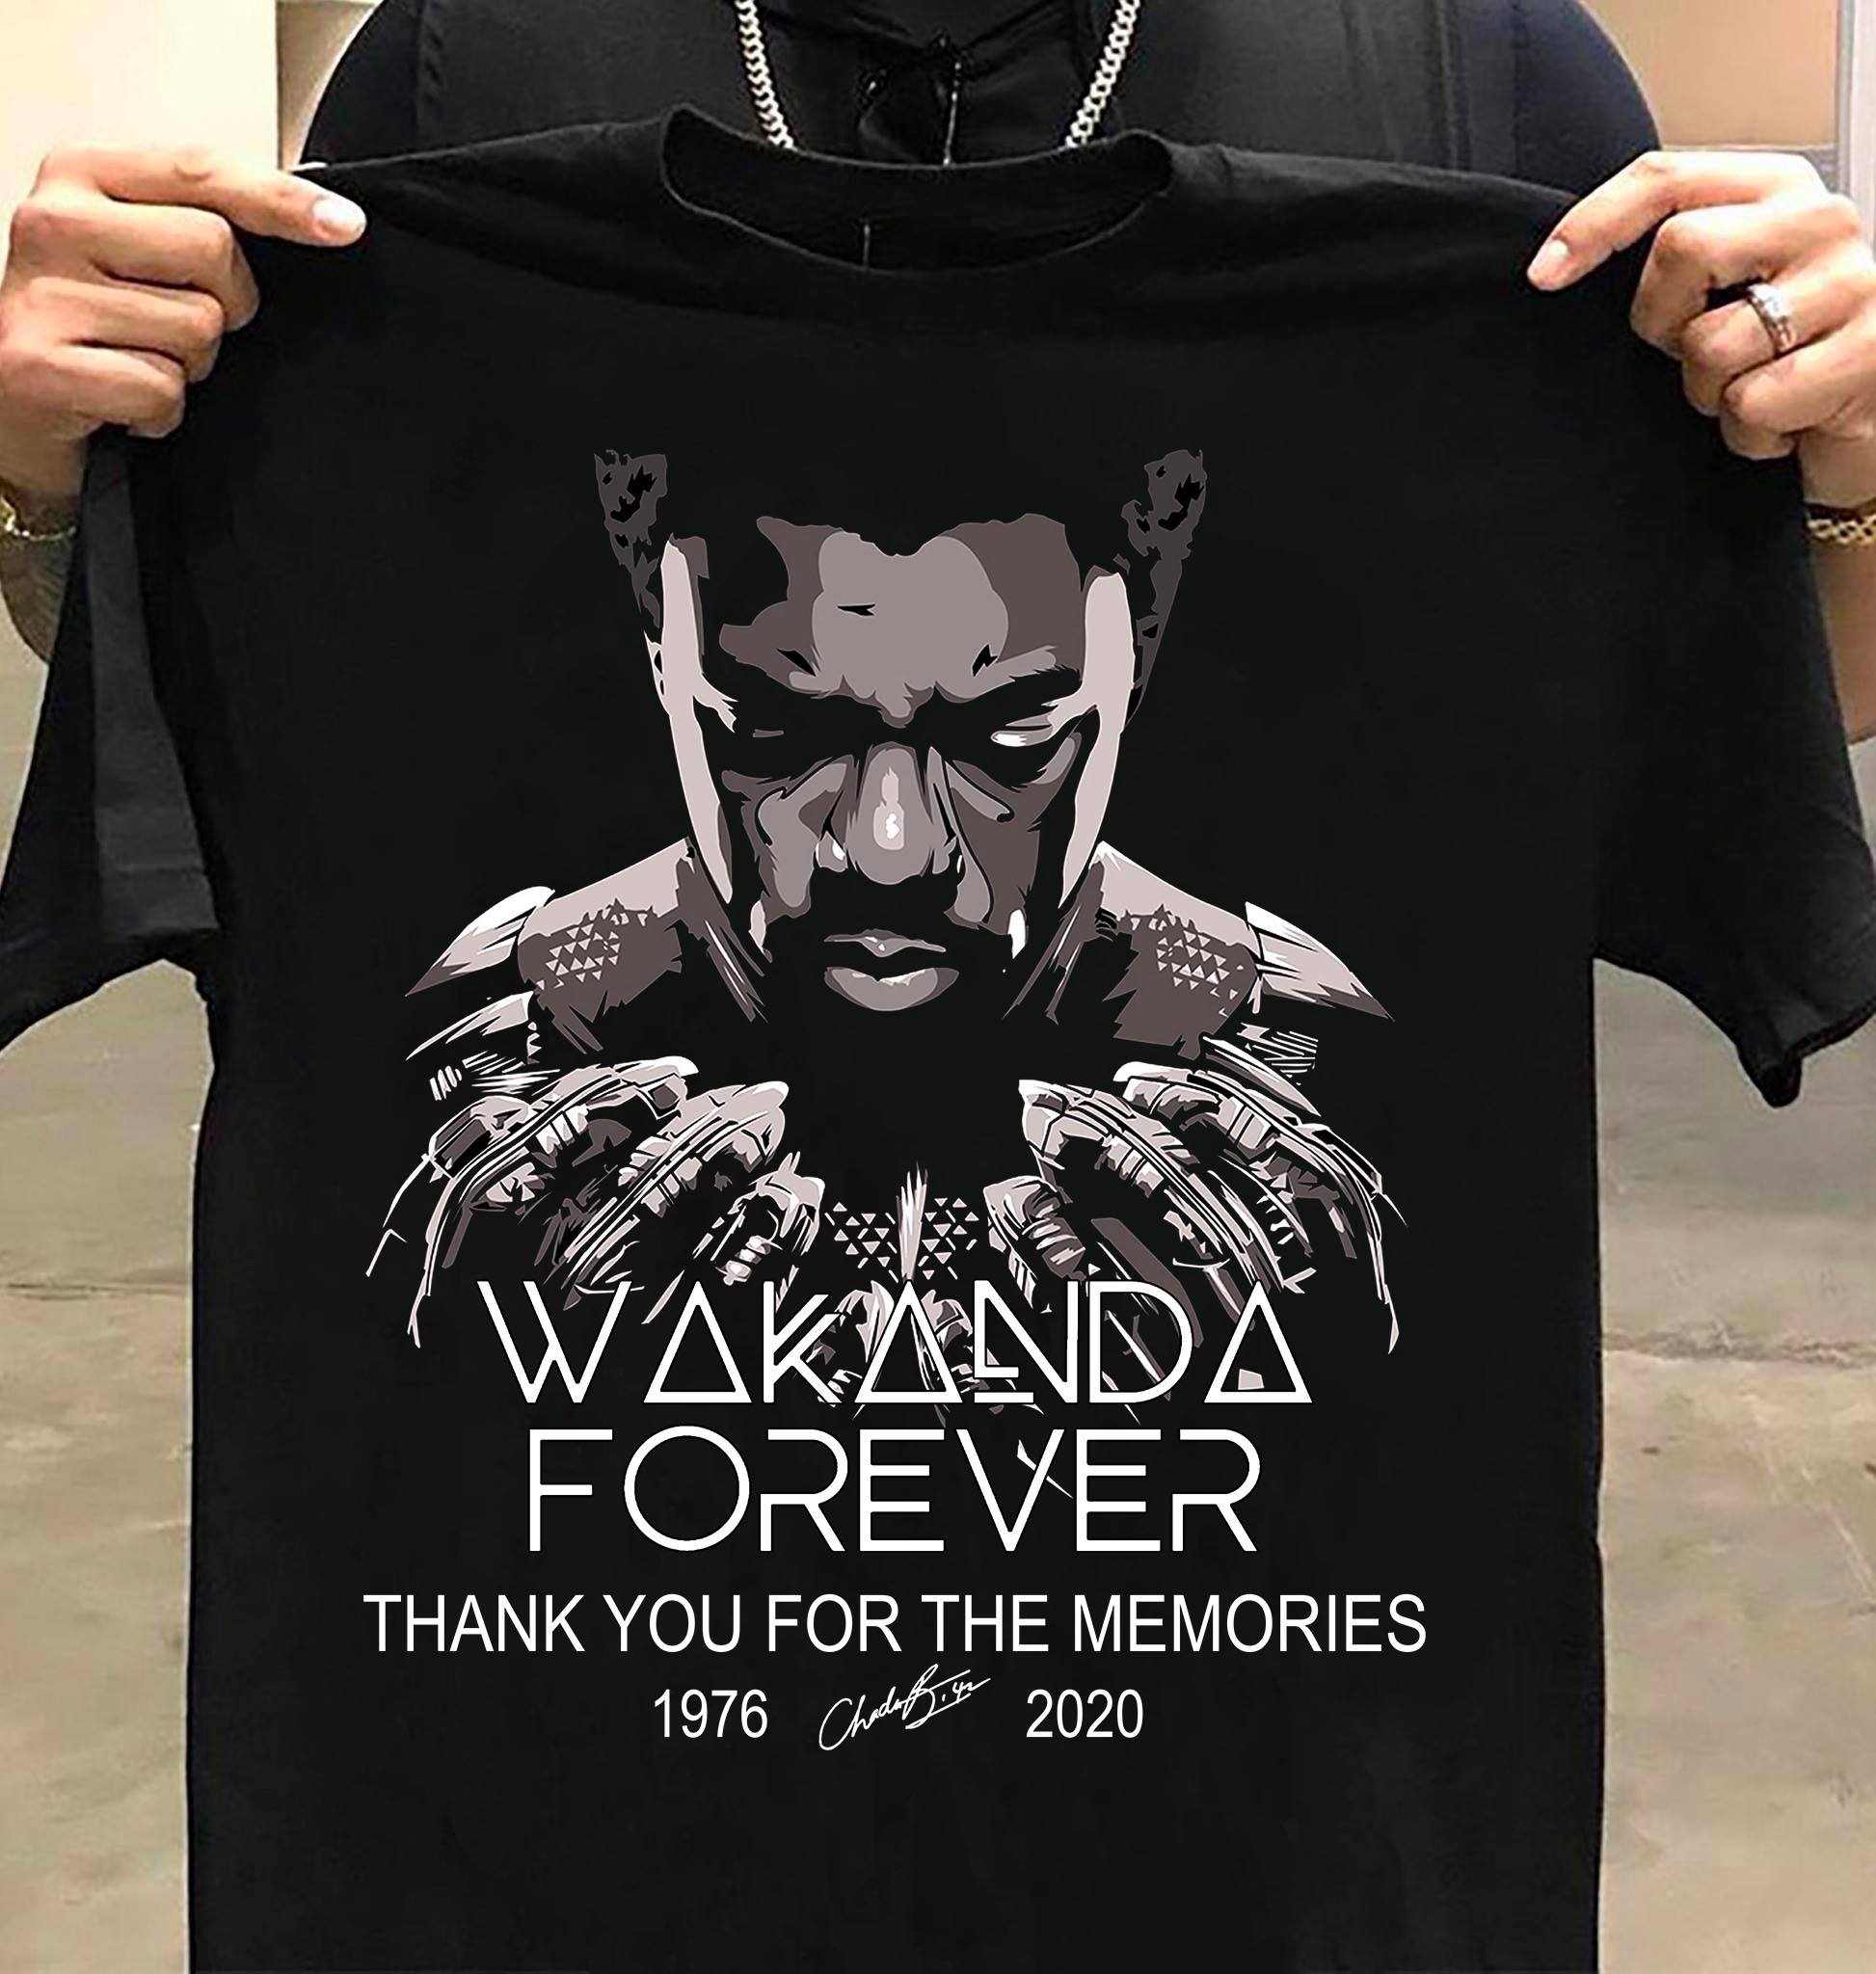 Black Panther Wakanda Shirt